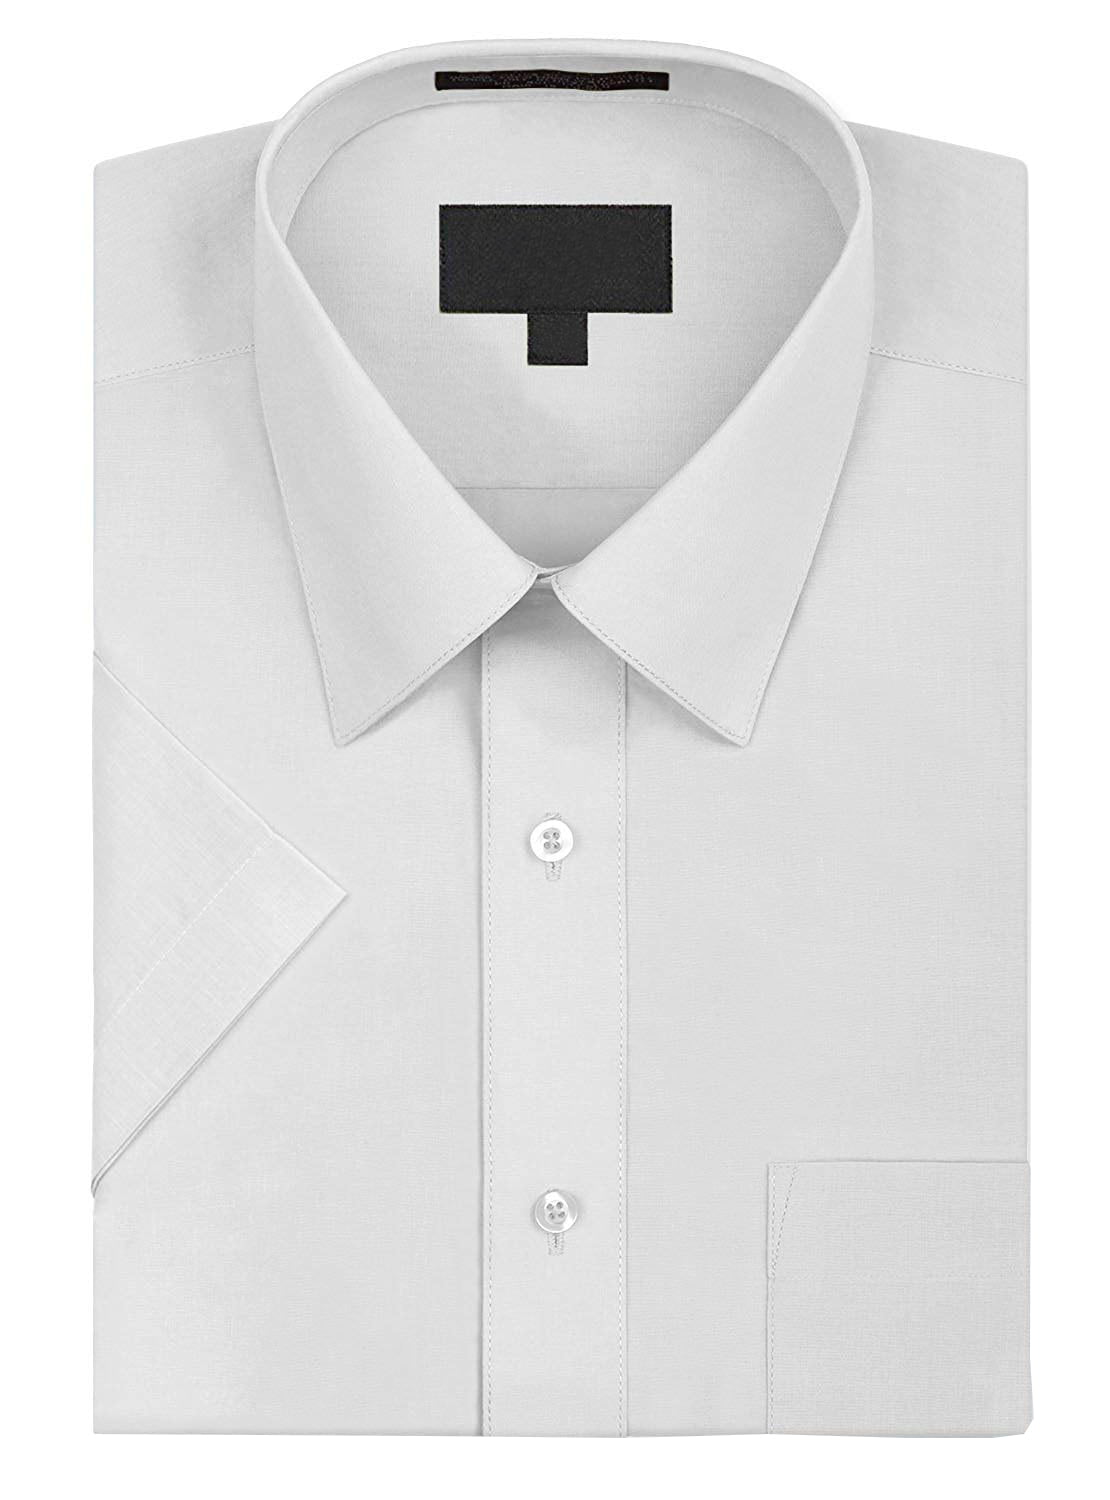 Omega Men's Short Sleeve Dress Shirt (Ivory, L) - Walmart.com